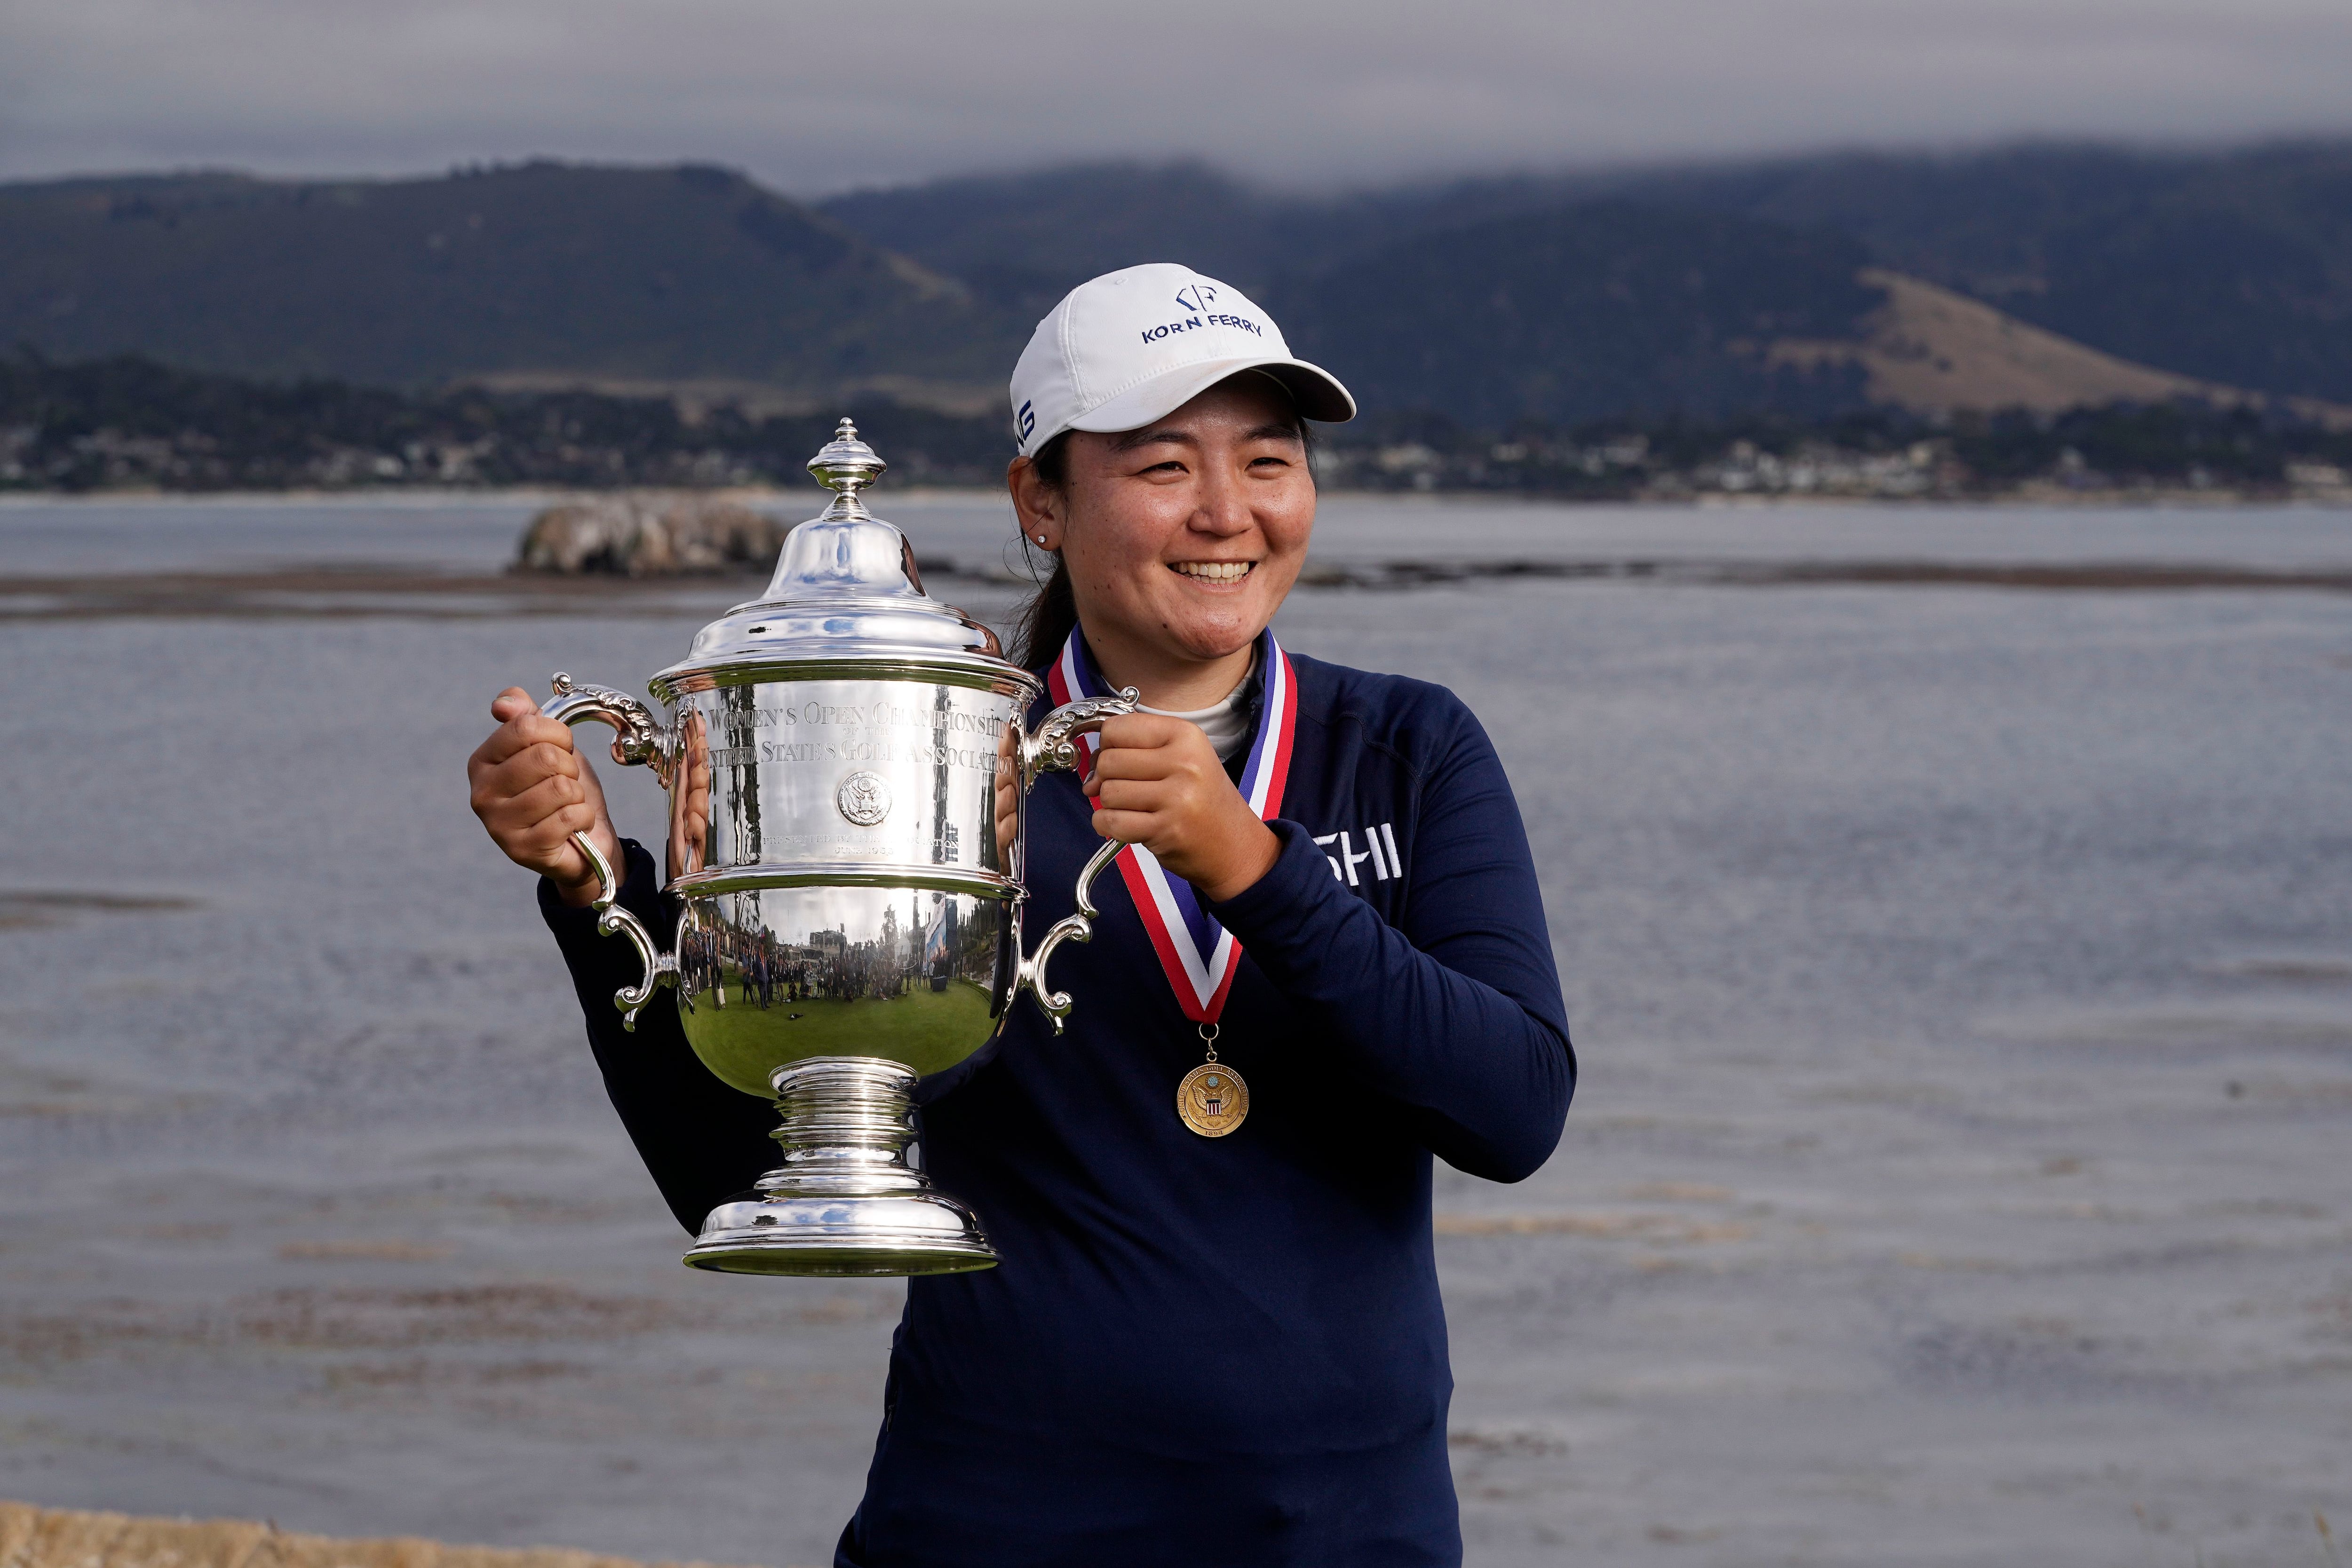 Golf: Allisen Corpuz wins the US Women's Open at Pebble Beach for